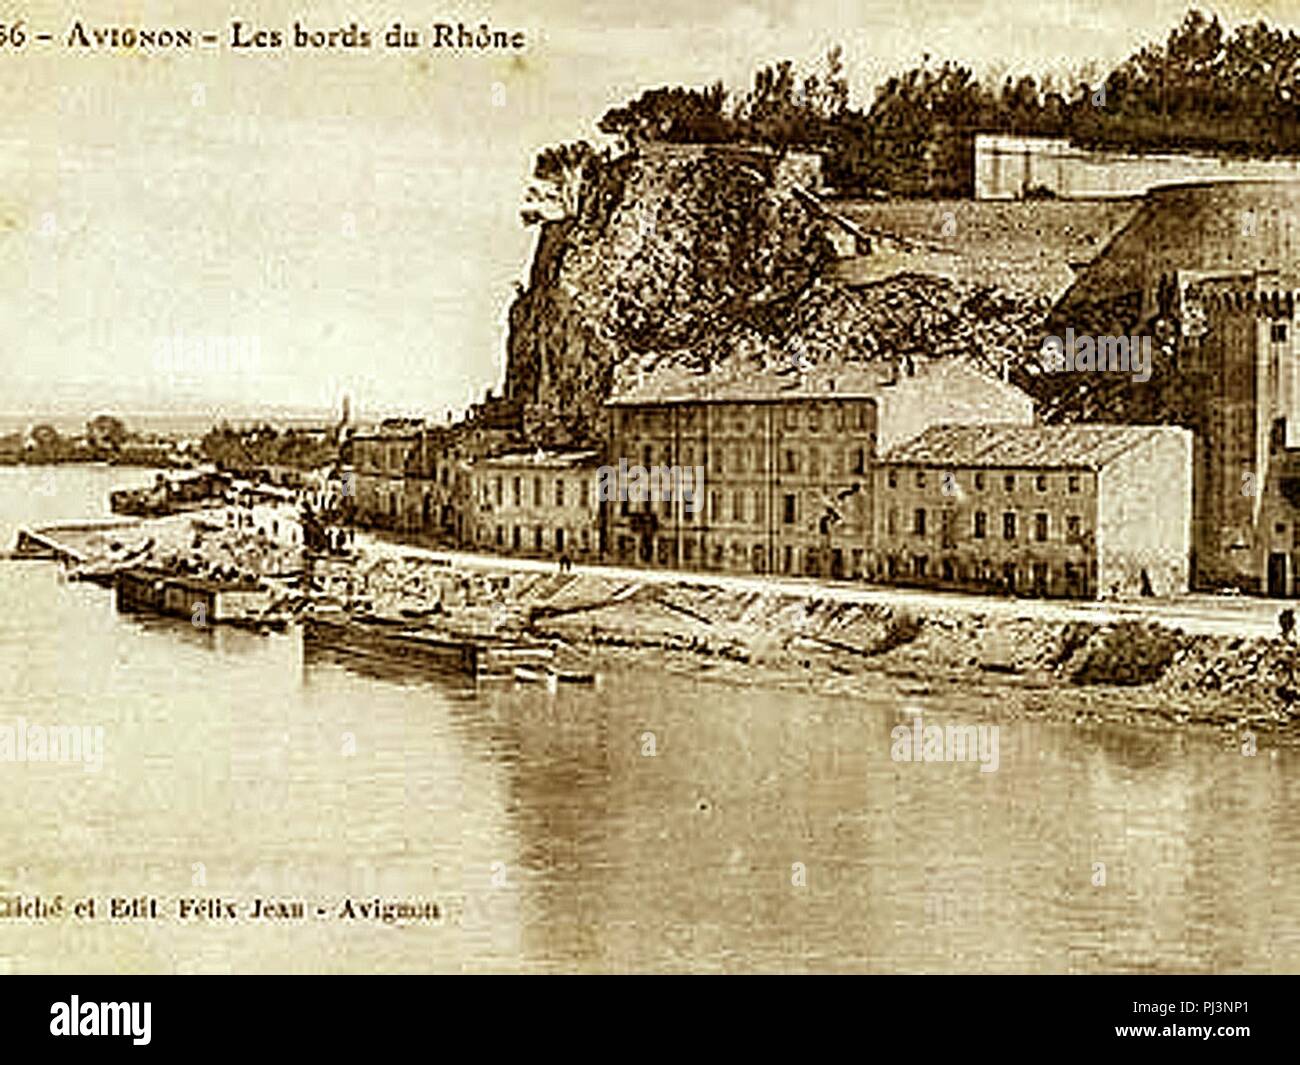 Avignon Bords du Rhône Maisons MH. Stock Photo